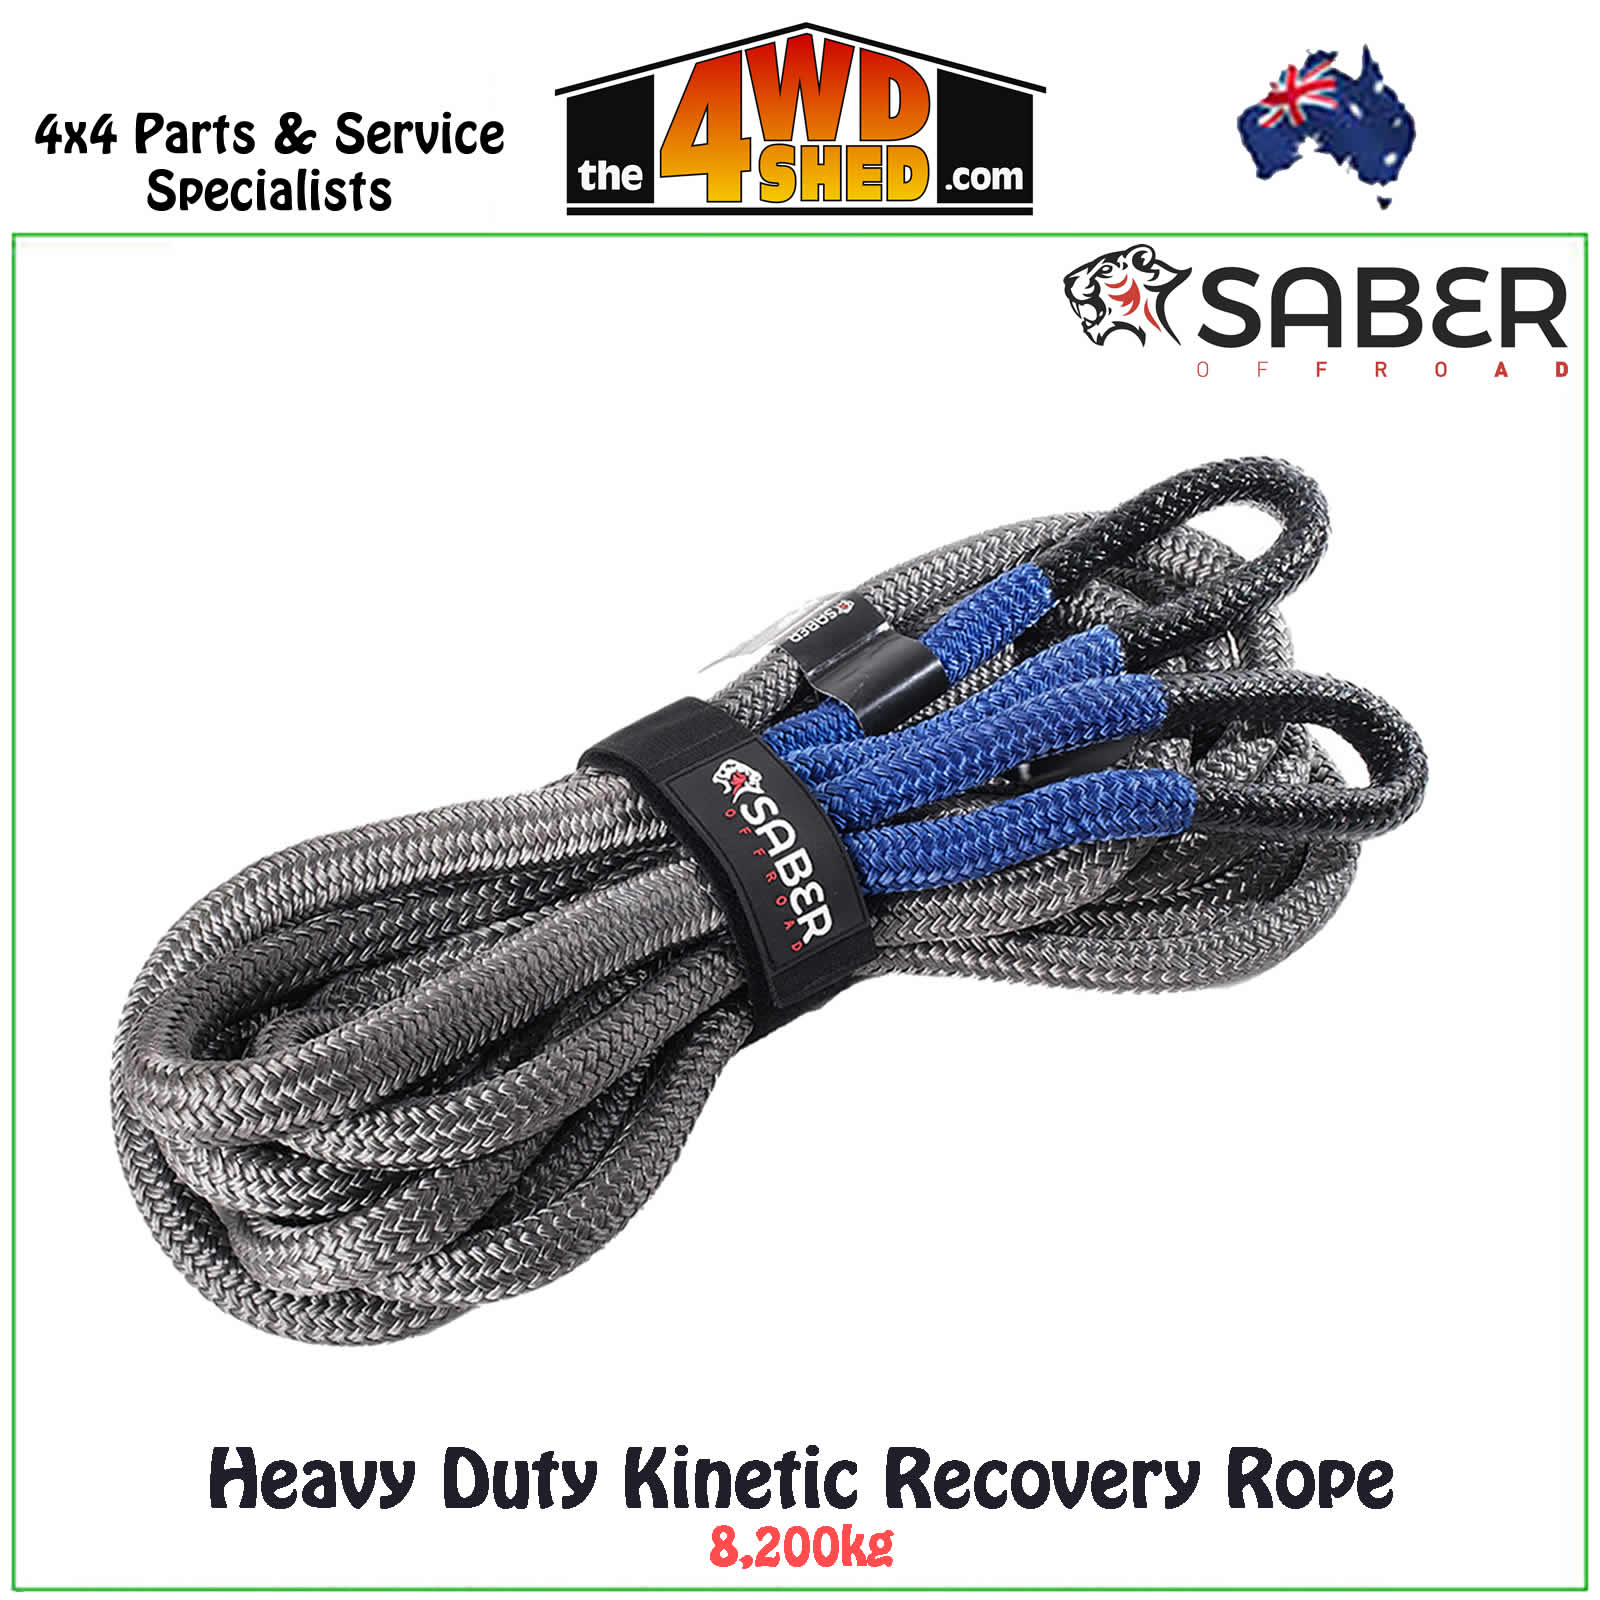 Heavy Duty Kinetic Recovery Rope 8,200kg